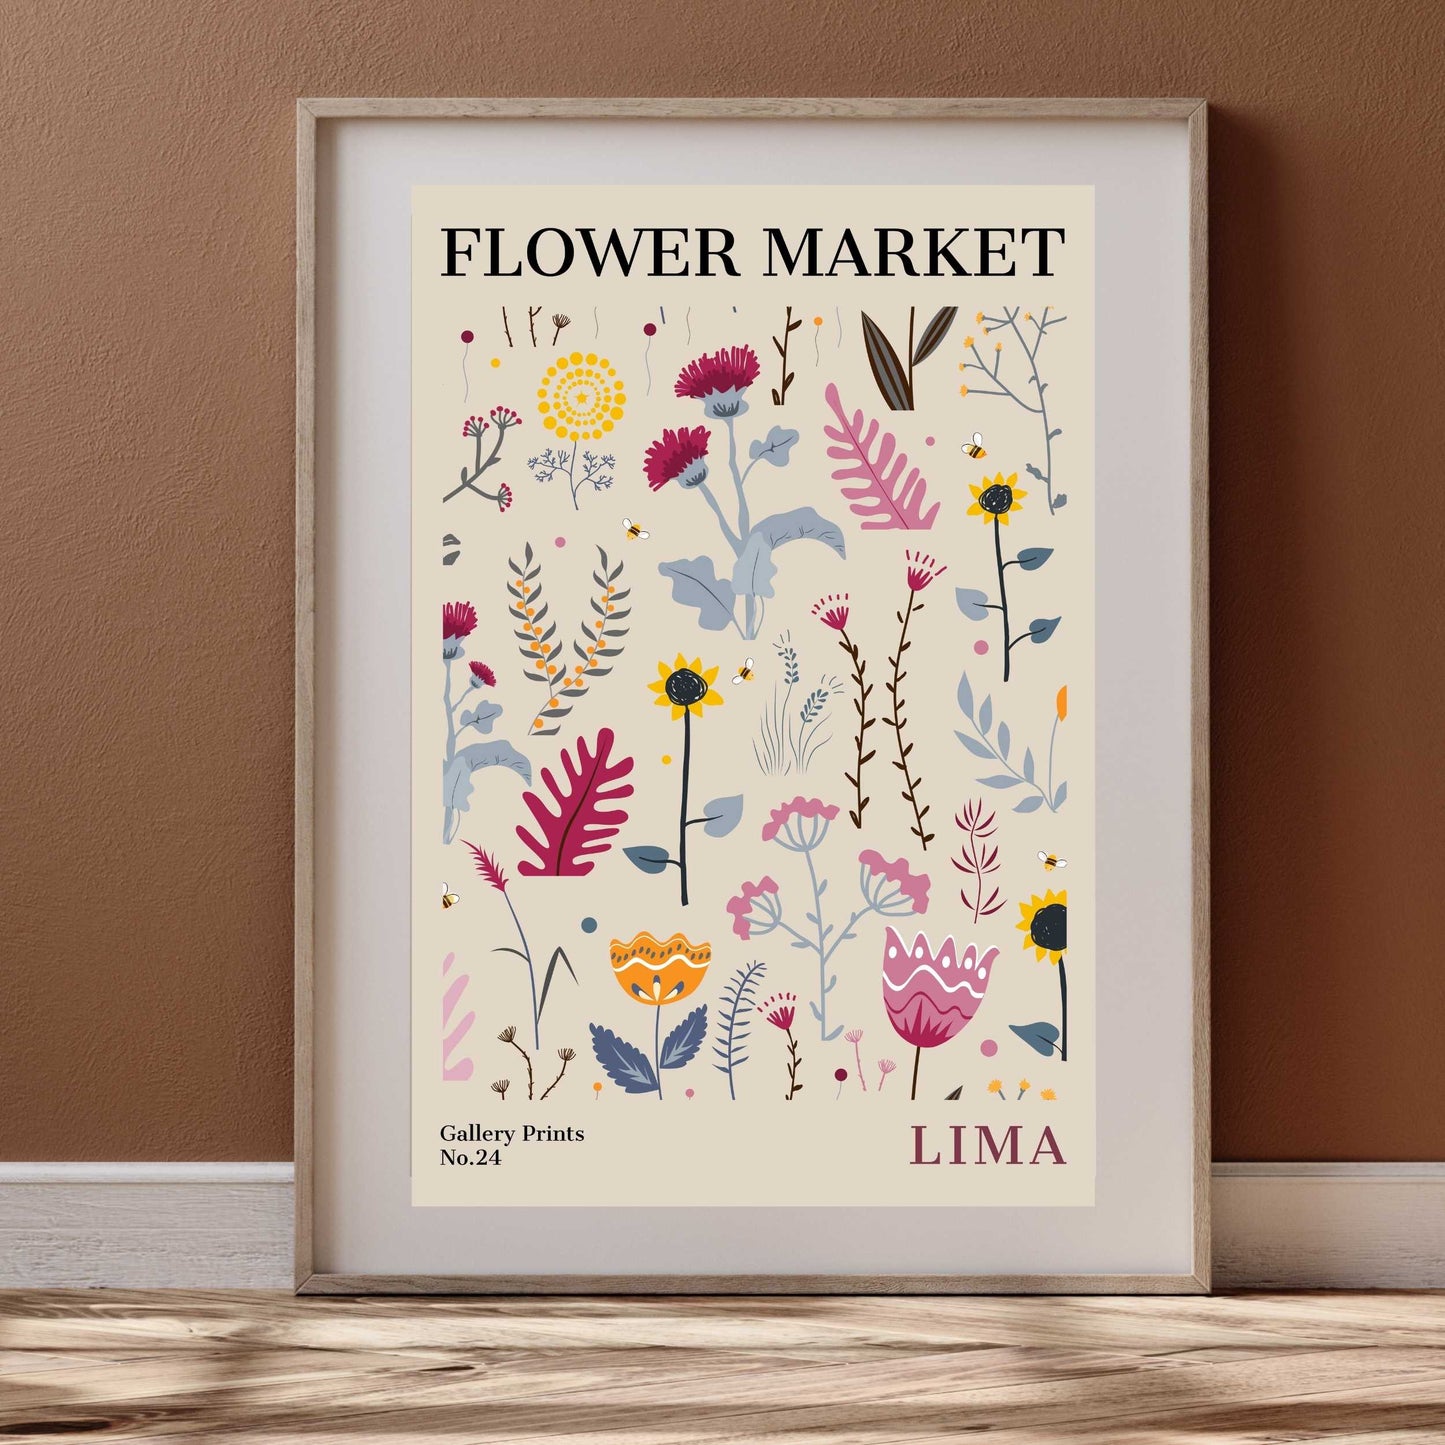 Lima Flower Market Poster | S01